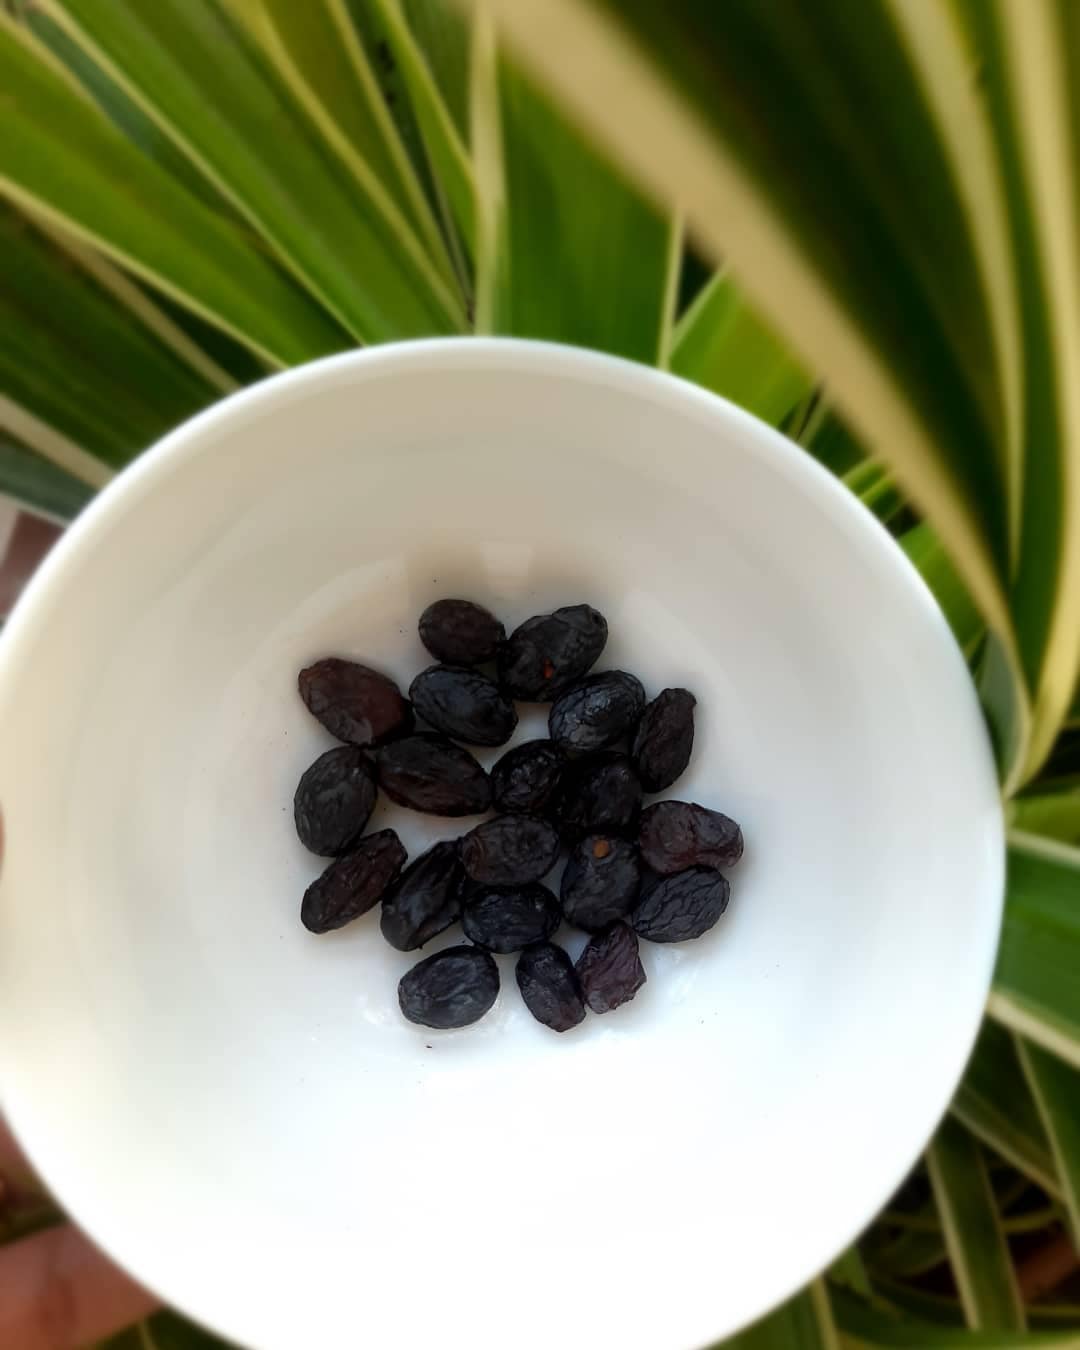 12 Health Benefits of Benefits of Black Raisins